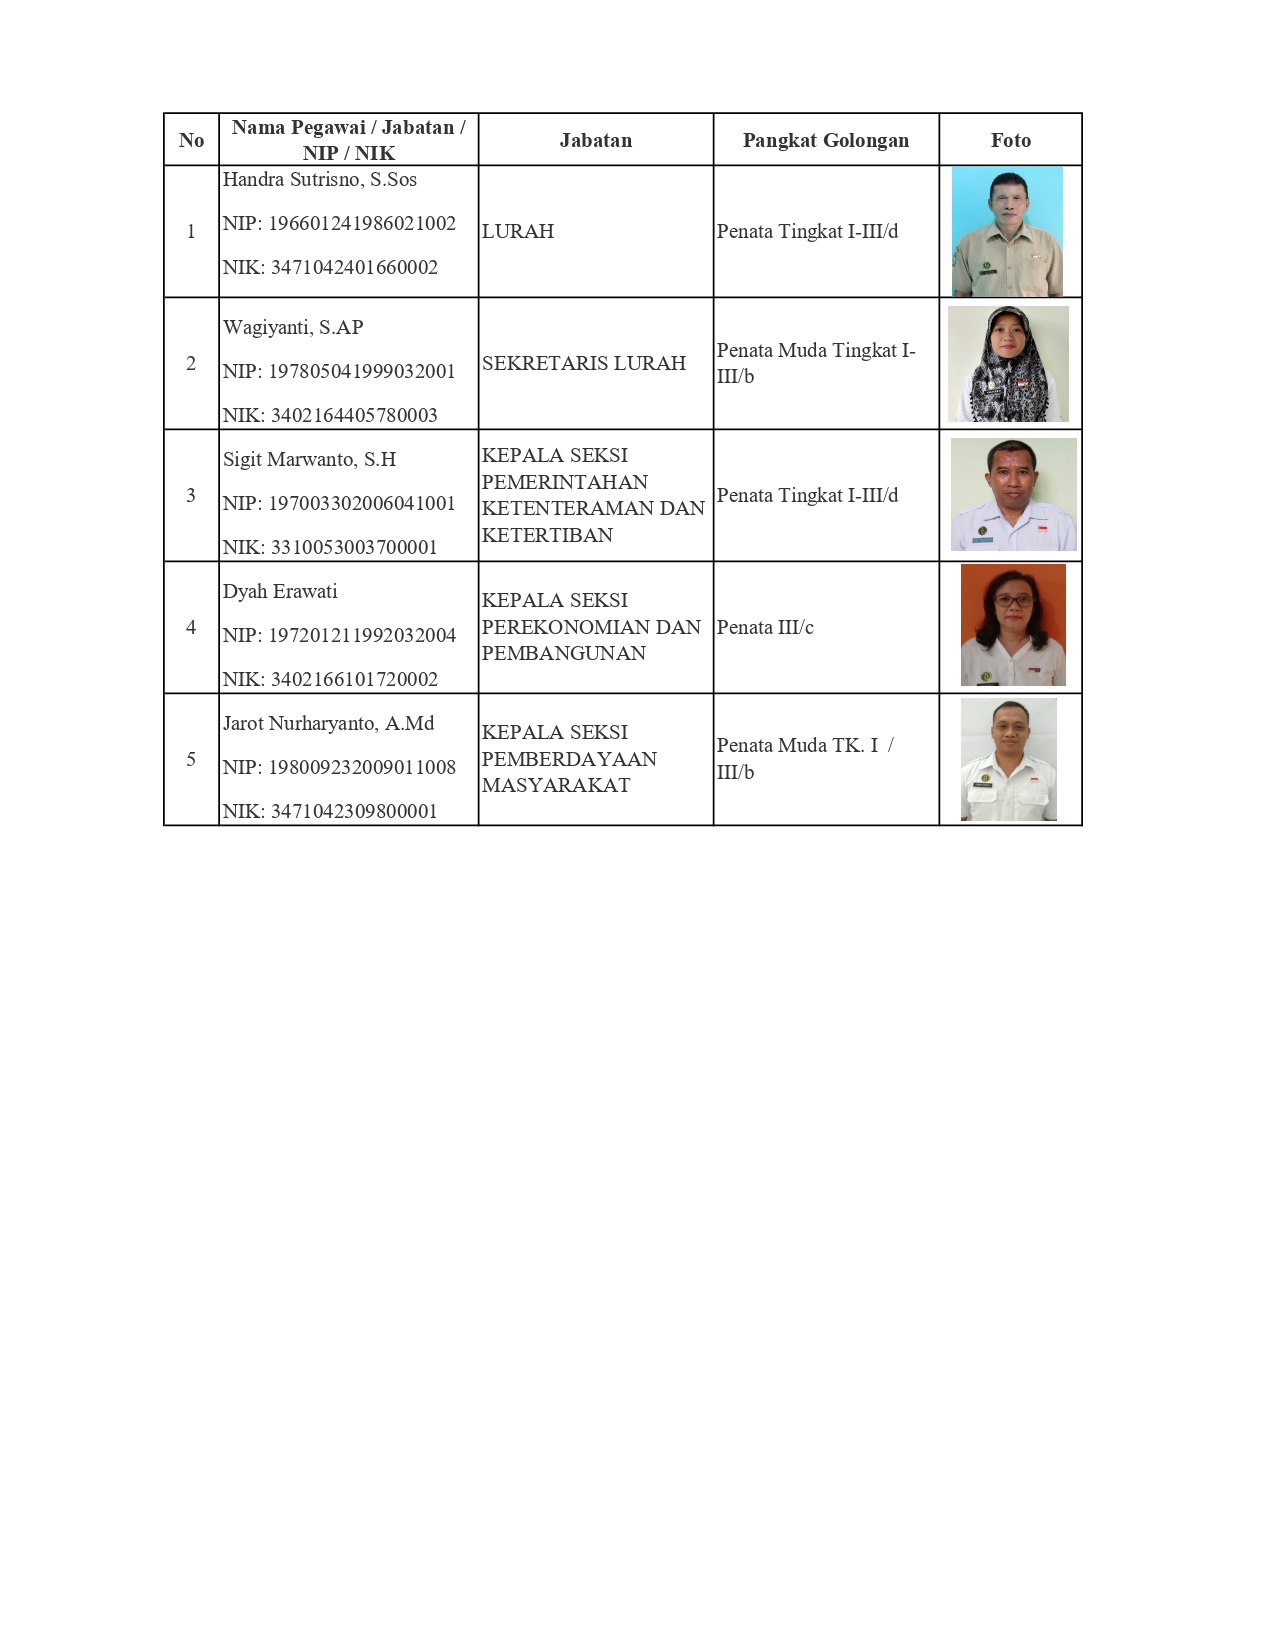 Profil Pejabat Struktural